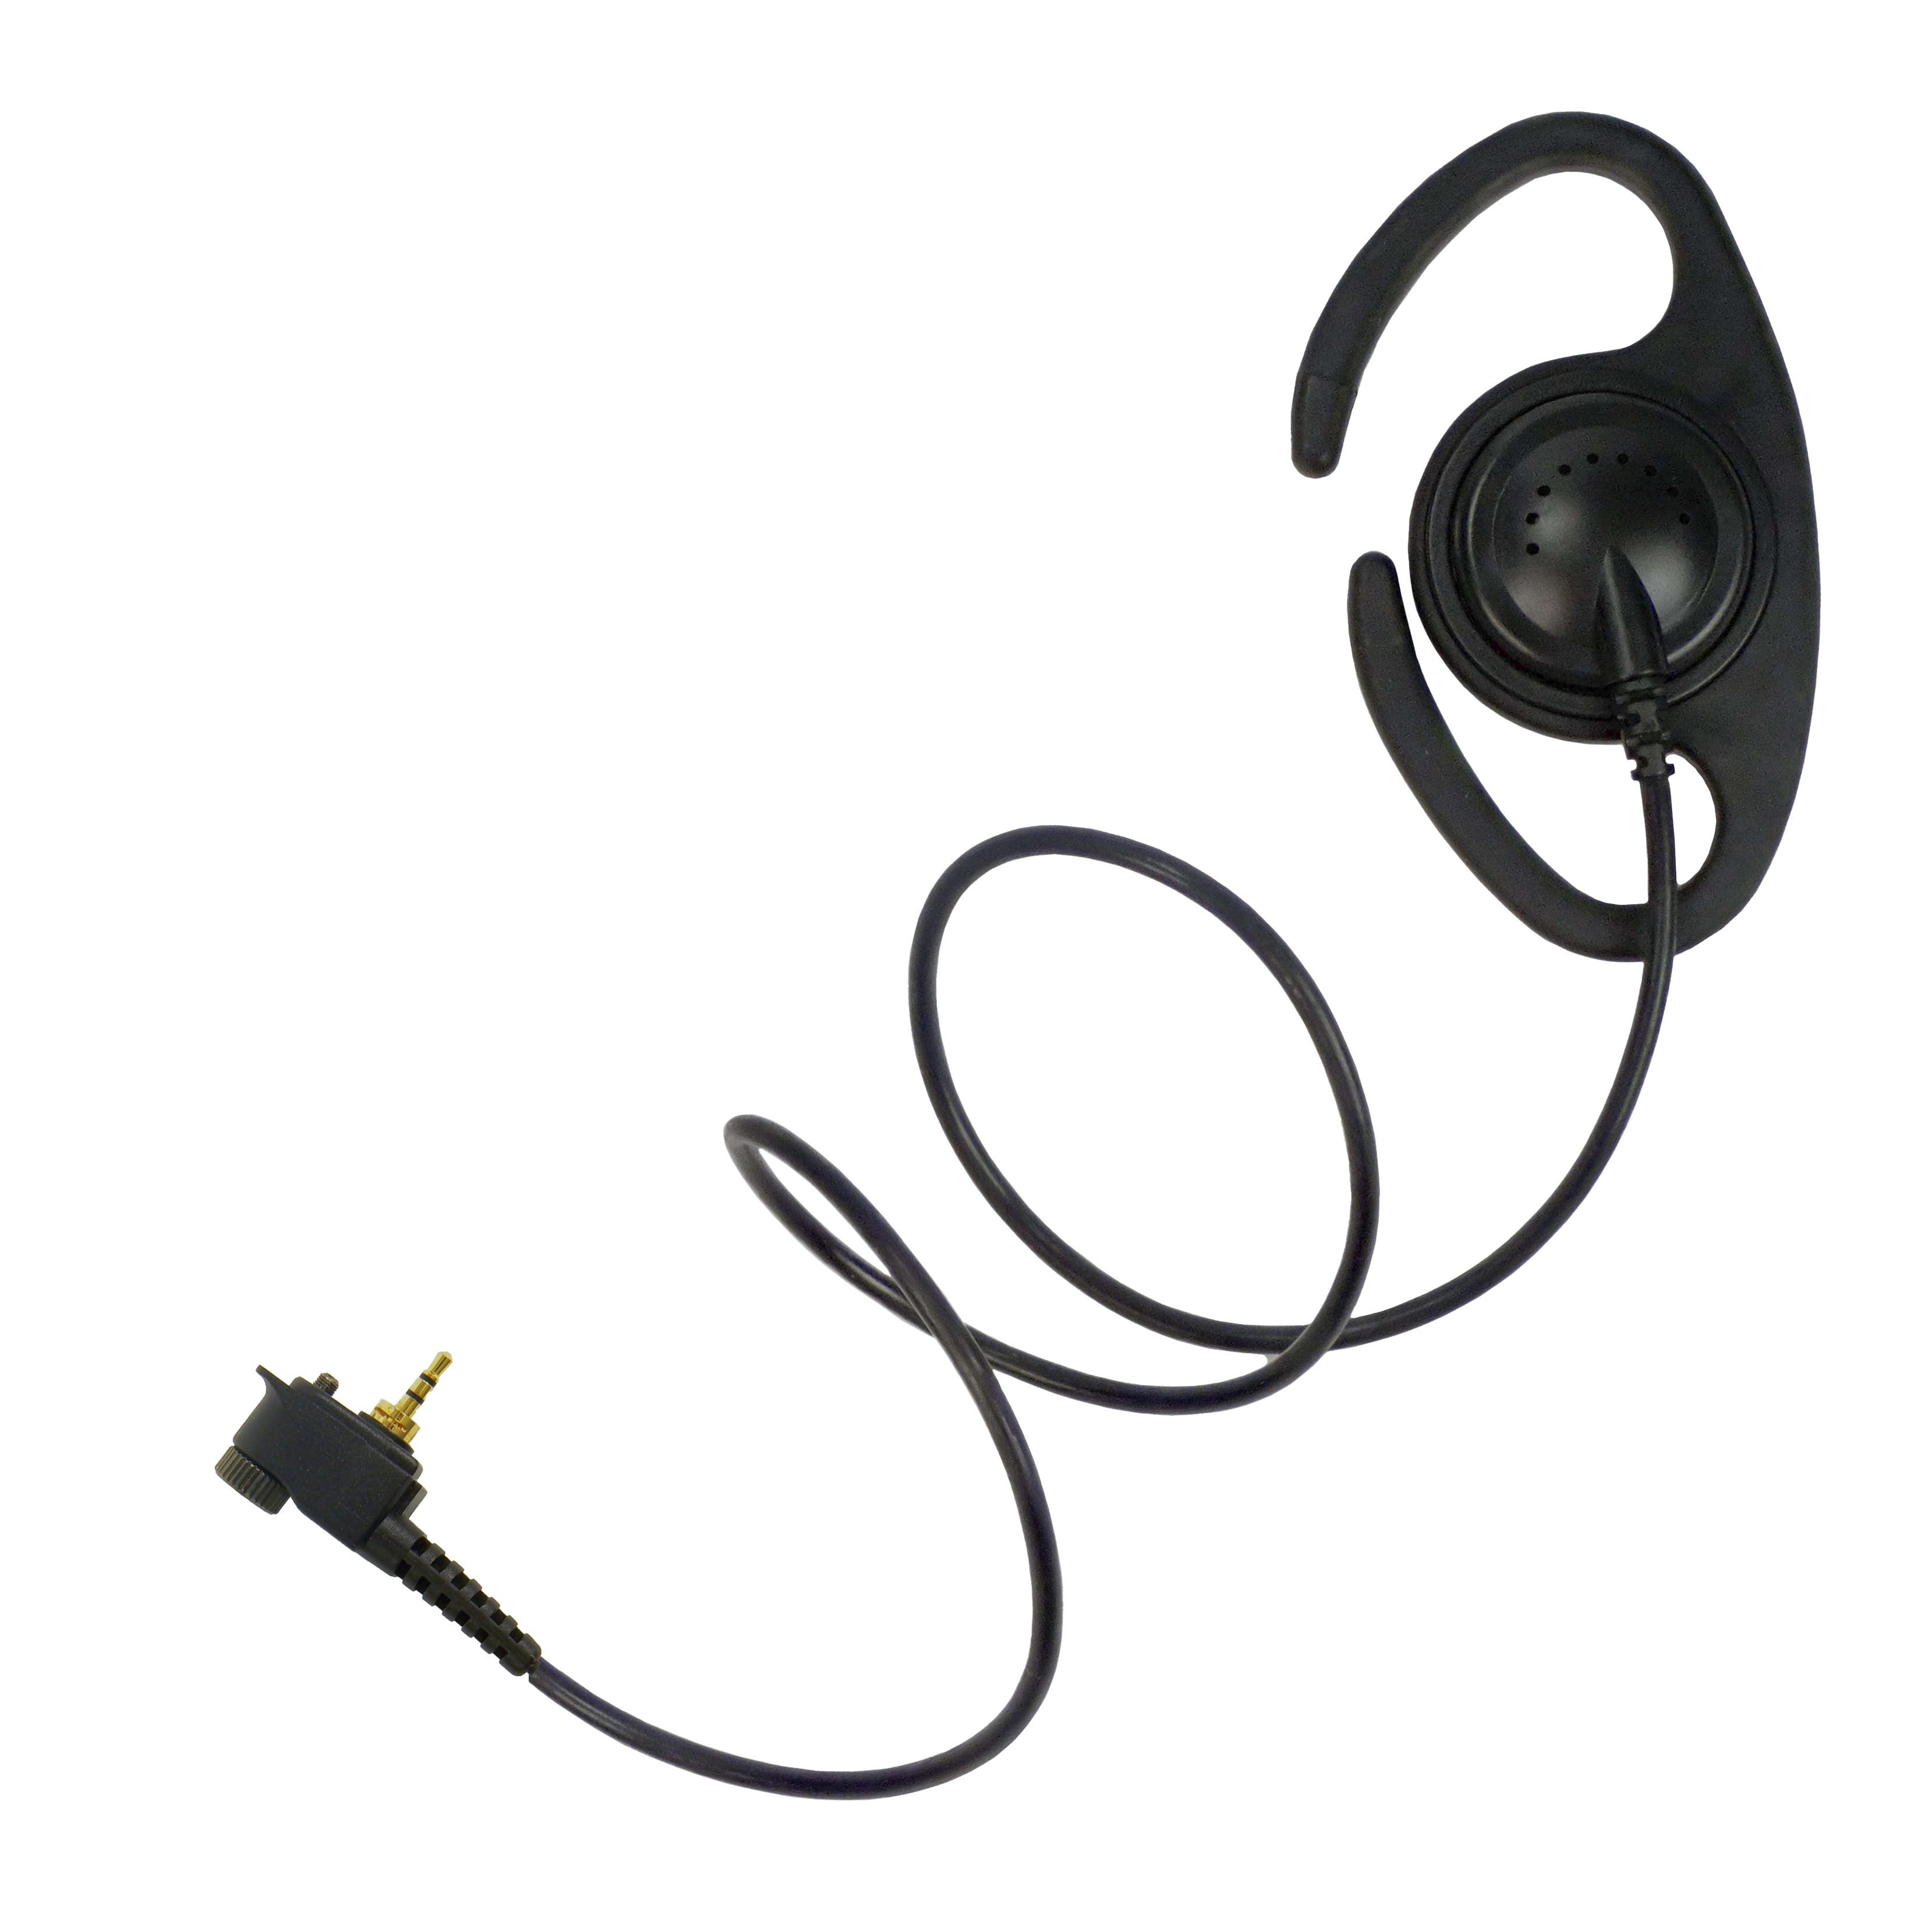 D-Shape listen-only earpiece for radio